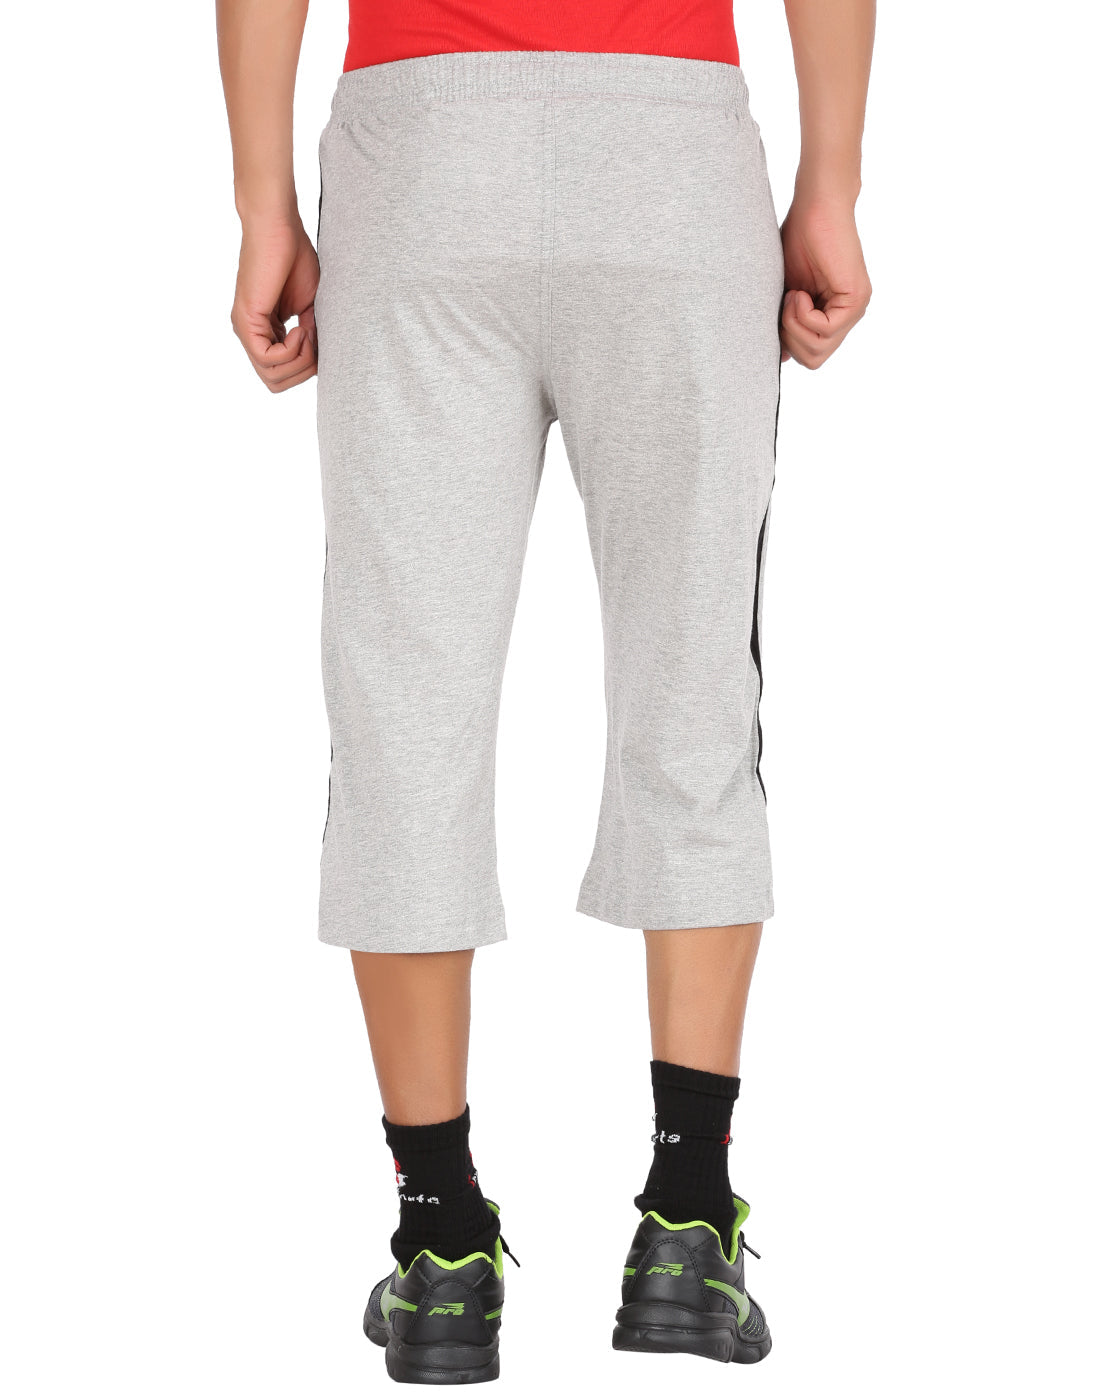 34th Length Studio Nexx Men Cotton ThreeFourth Shorts 4 Pockets In Front